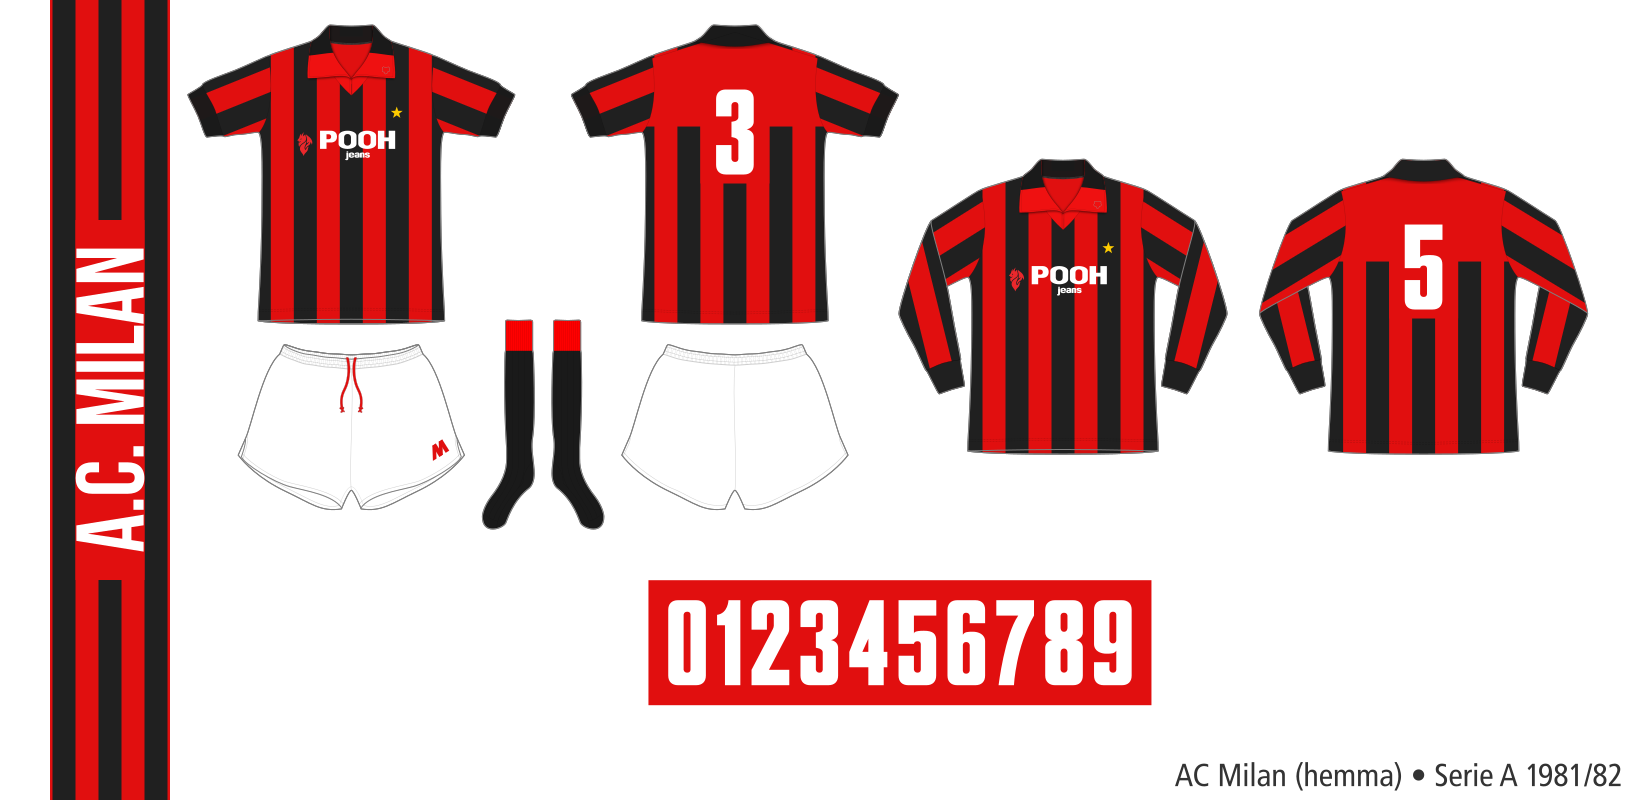 AC Milan 1981/82 (hemma)